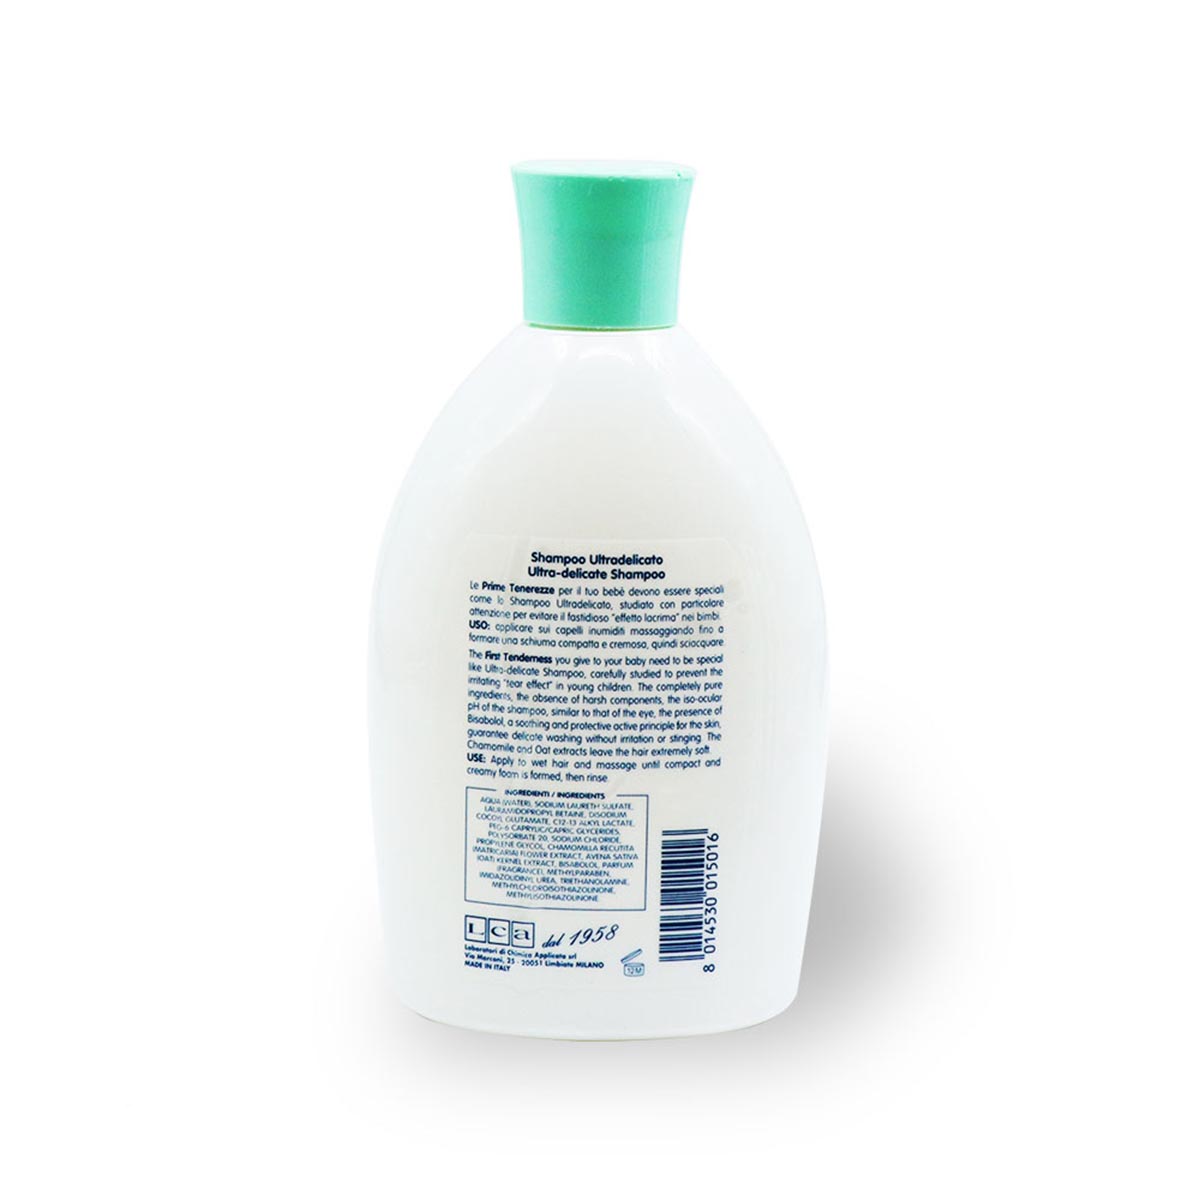 شامپو نوزاد بسیار ملایم کلیون Cliven Ultra – Delicate Shampoo (کد1173)